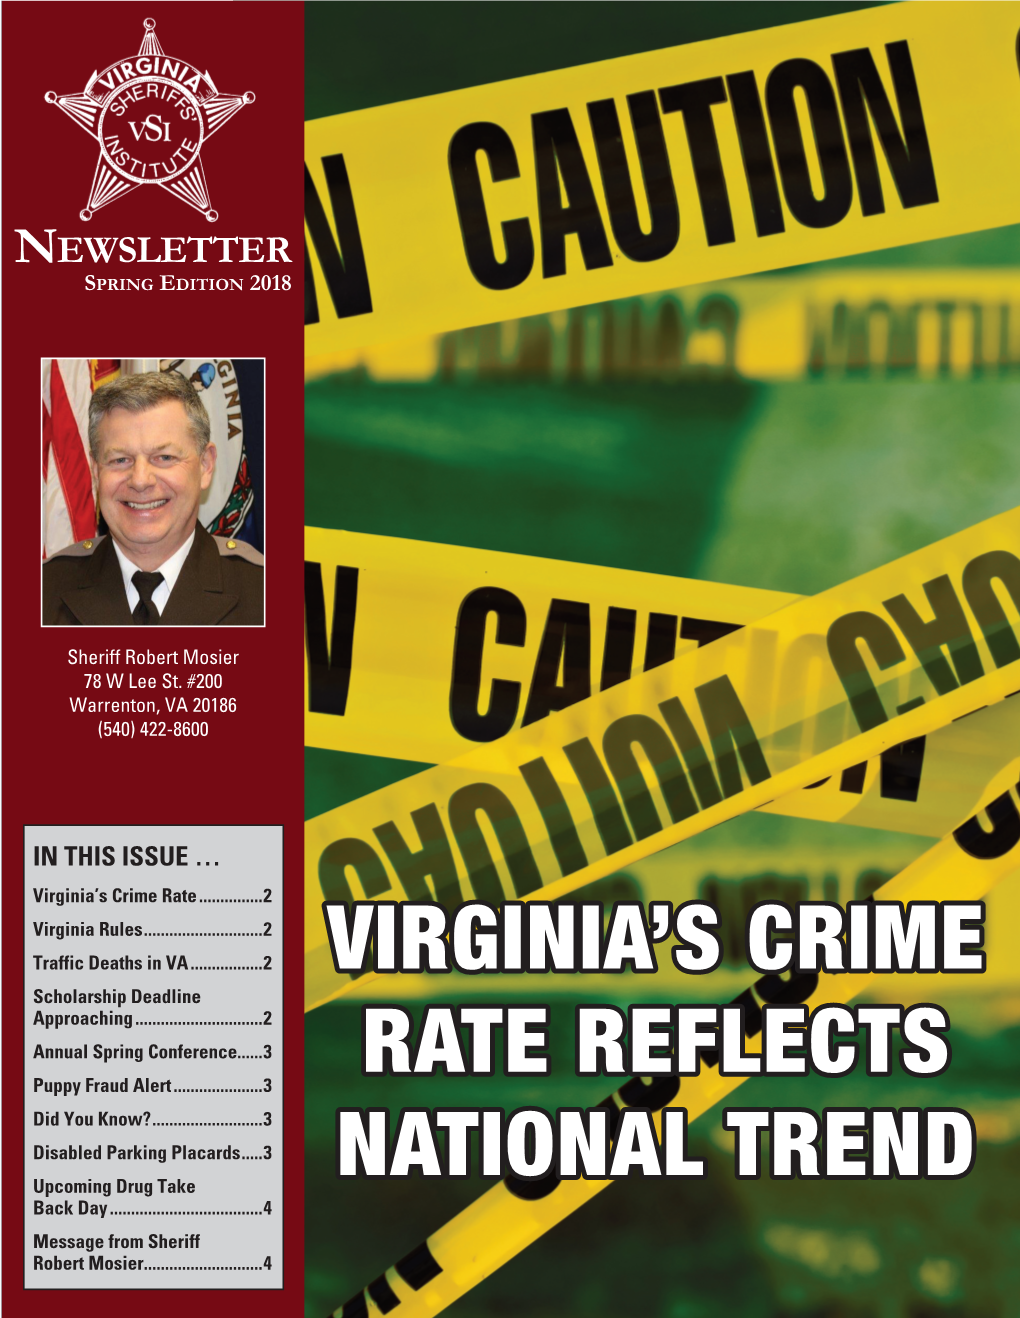 Virginia's Crime Rate